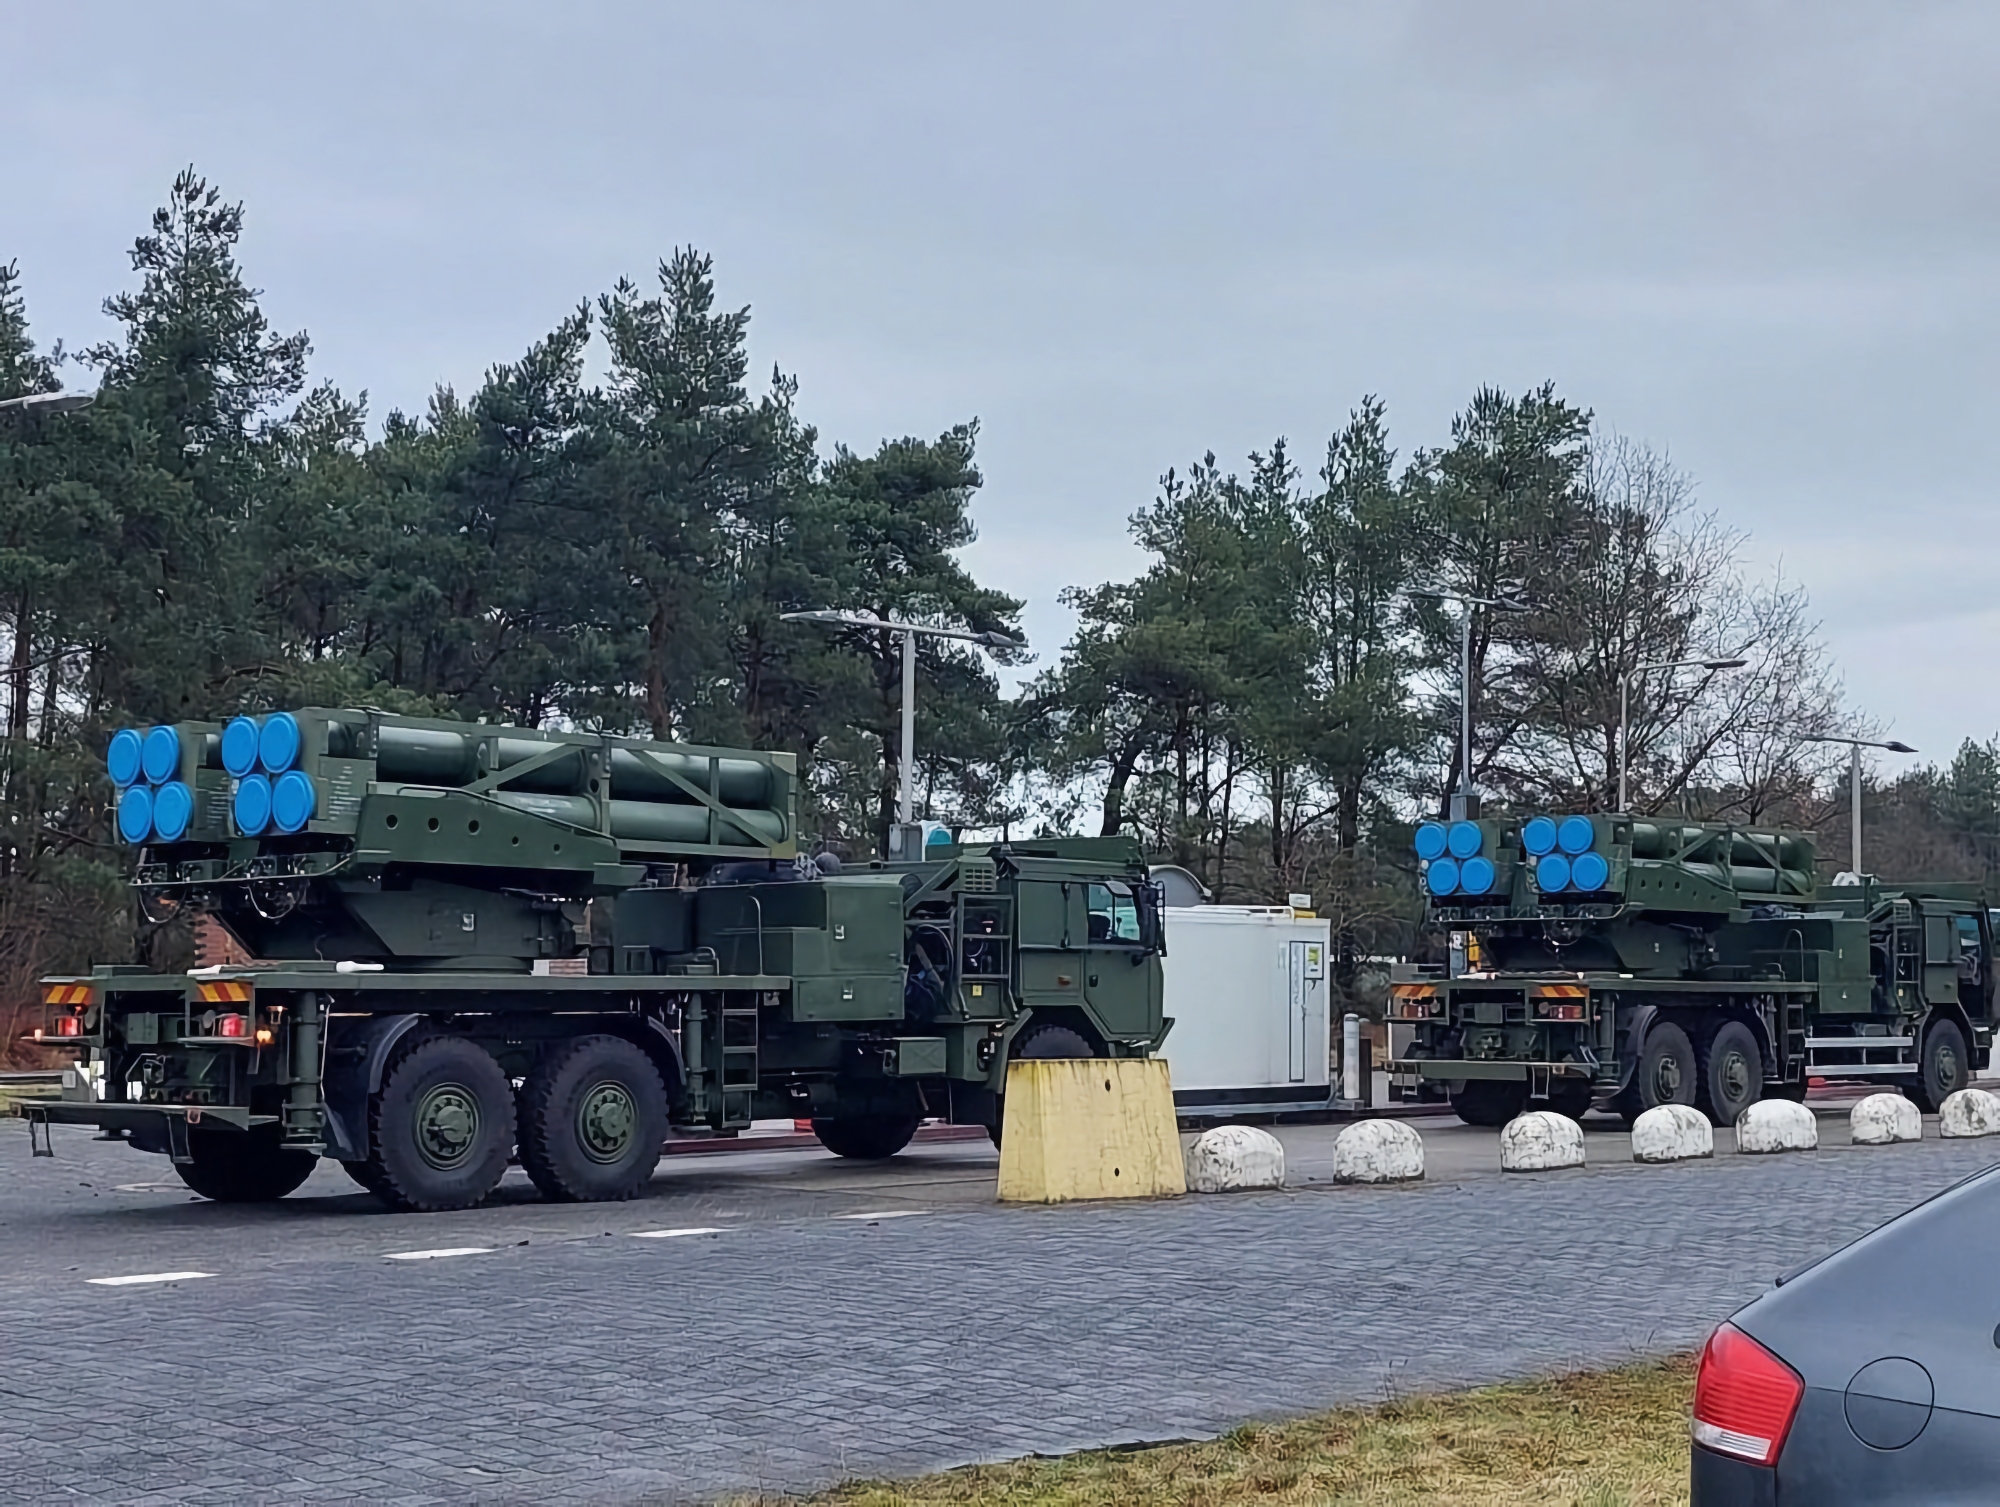 El Ejército holandés ha recibido el primer lote de lanzacohetes múltiples israelíes PULS en servicio.